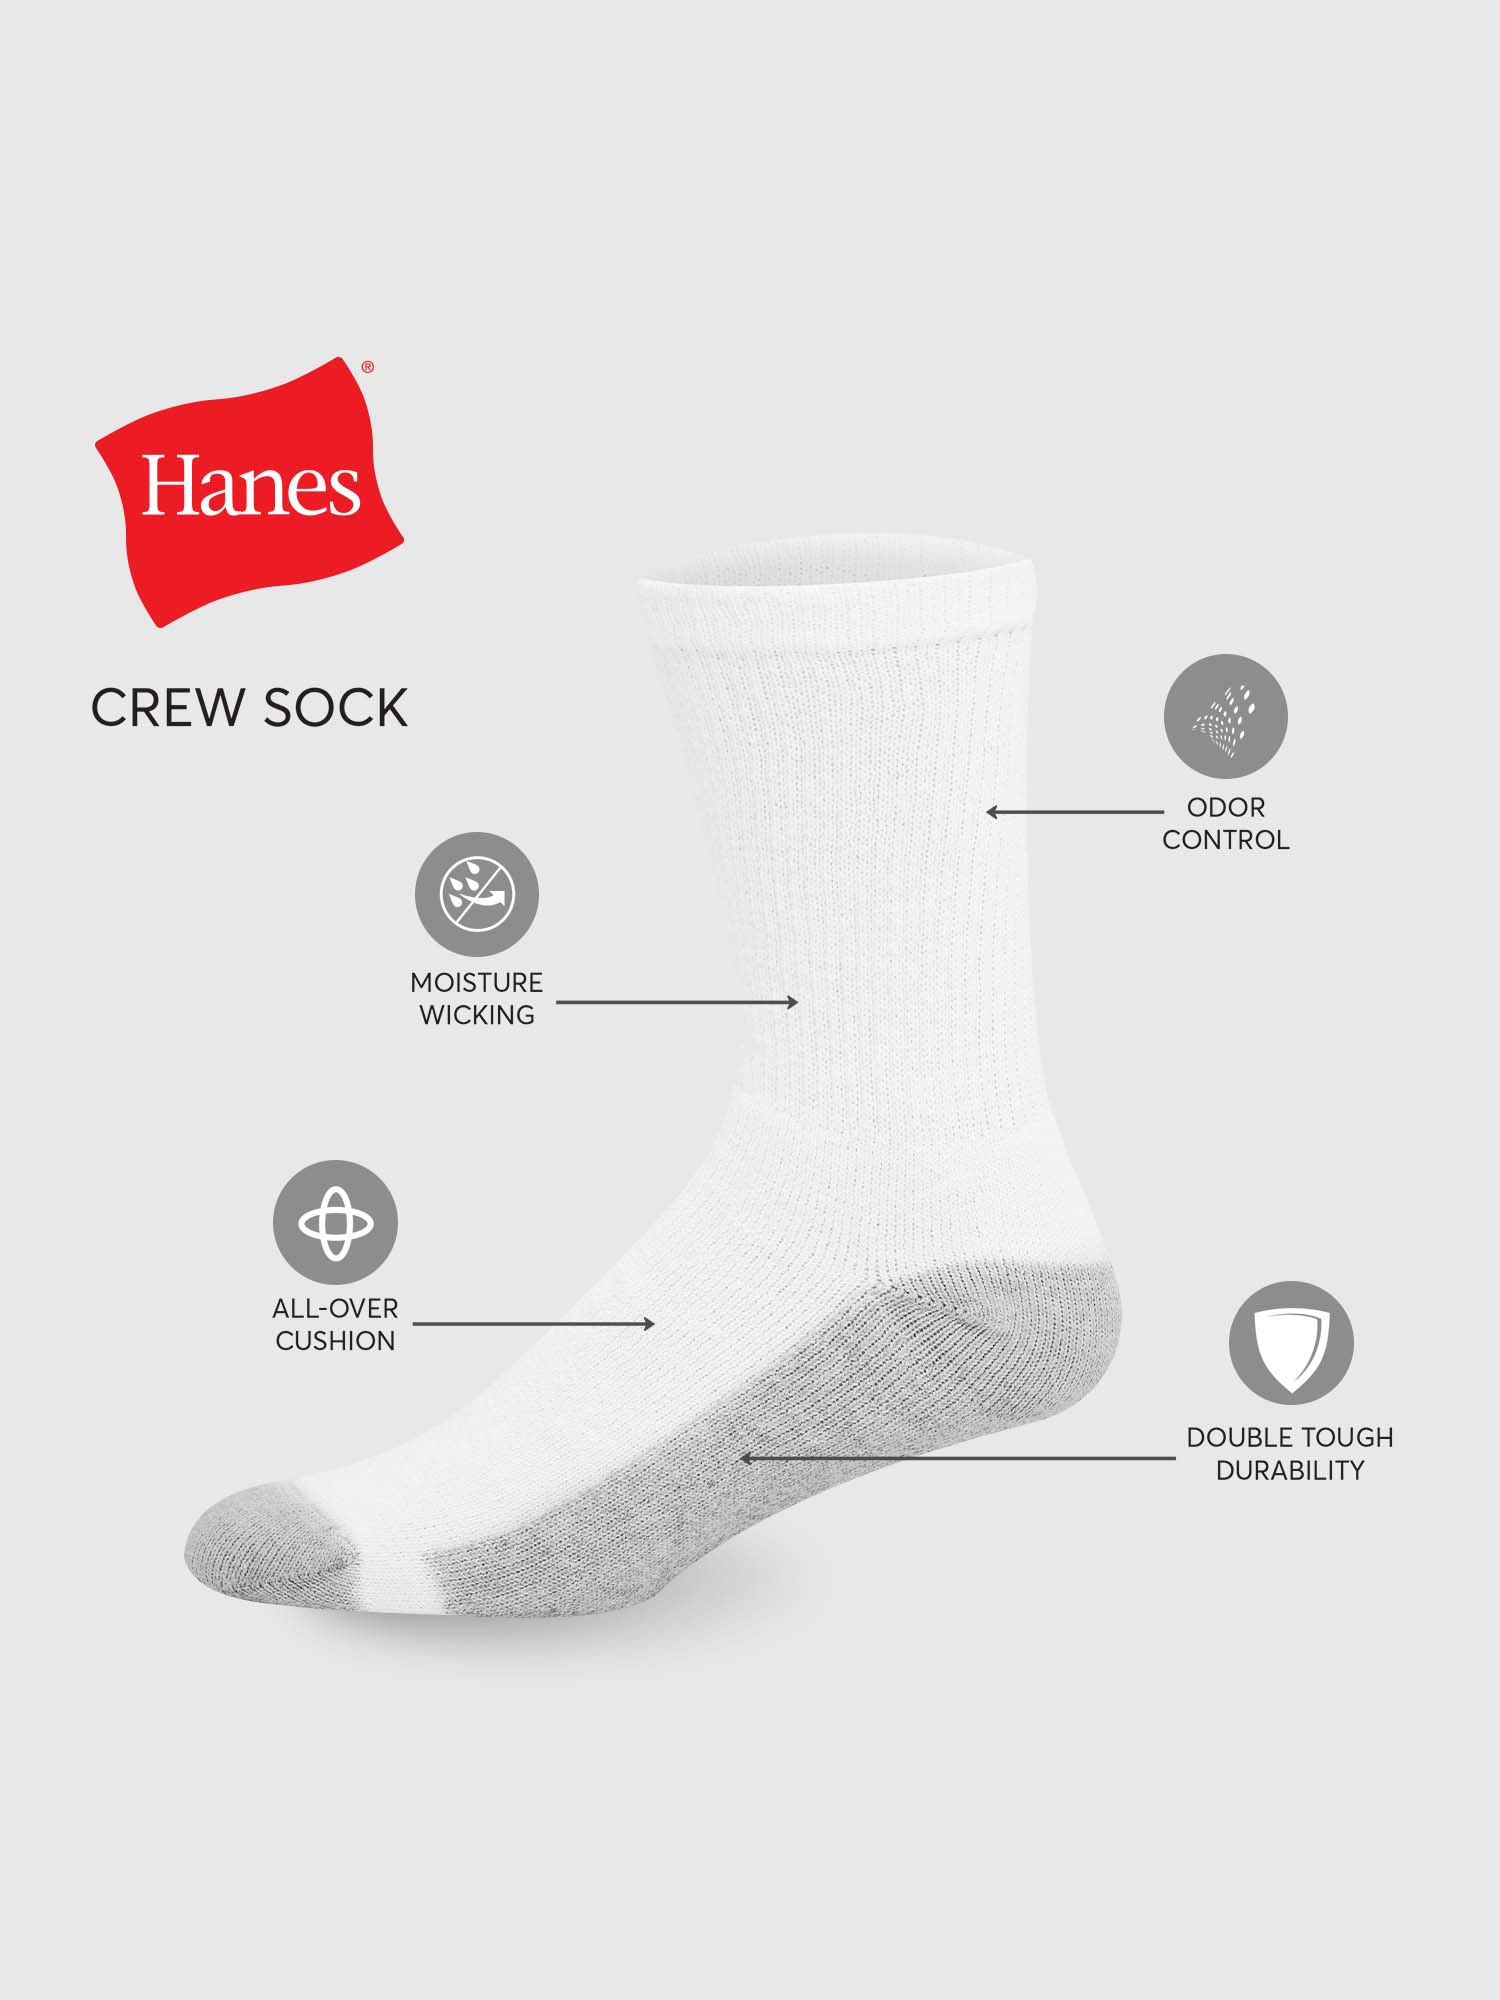 Hanes Men's Max Cushion Crew Socks, 12-Pack - image 5 of 8